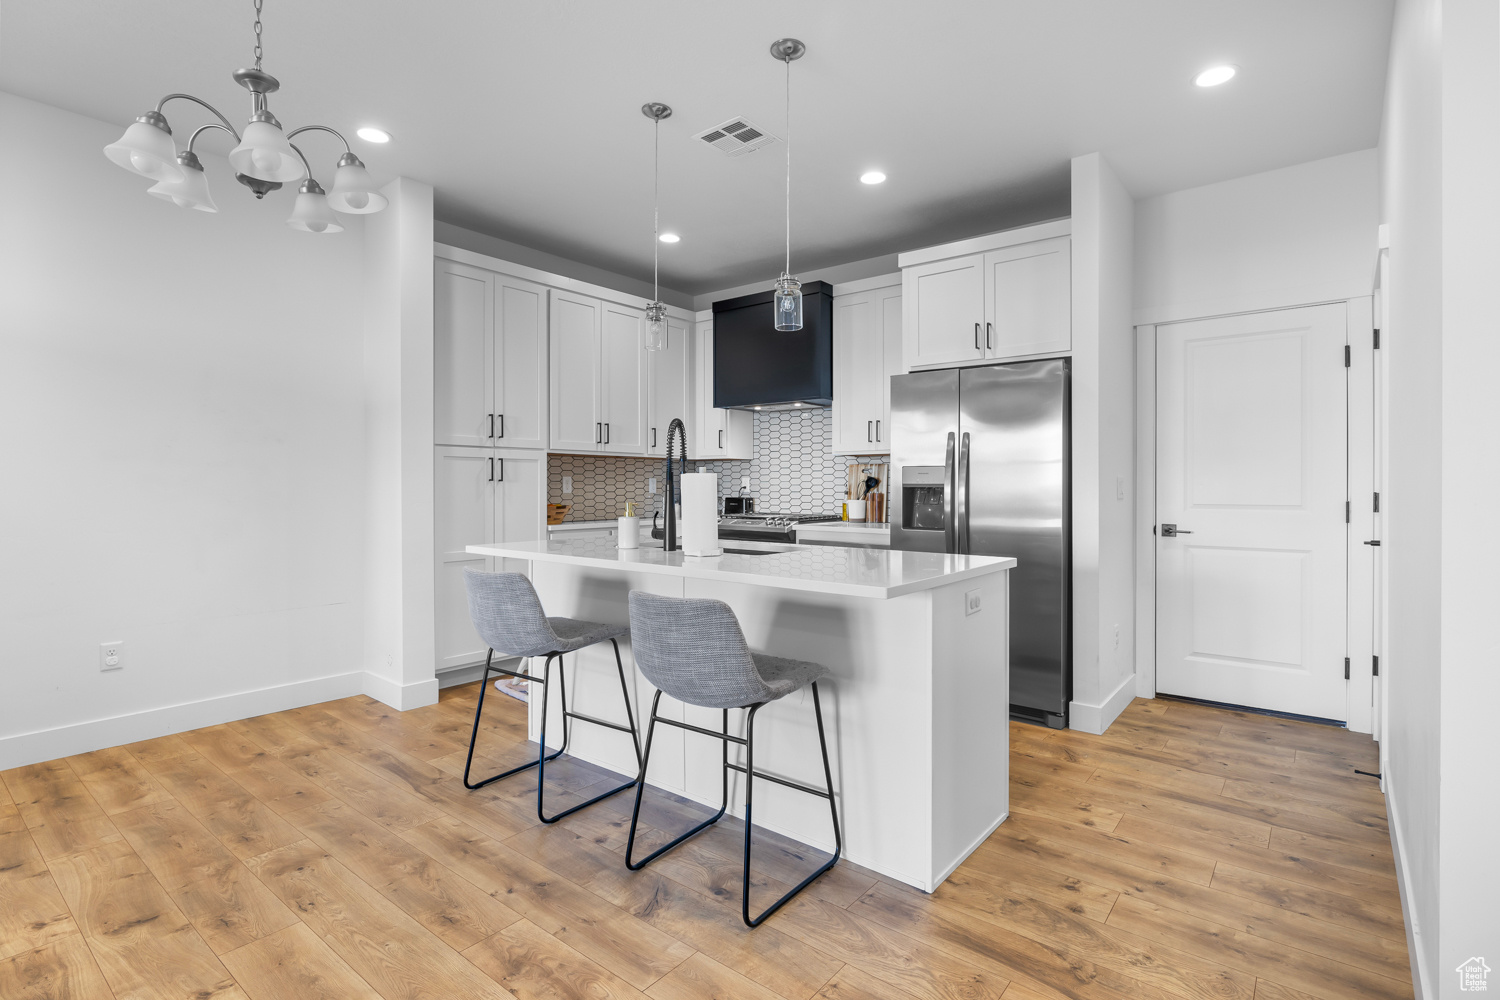 Kitchen with backsplash, light hardwood / wood-style flooring, stainless steel fridge, a kitchen island with sink, and pendant lighting